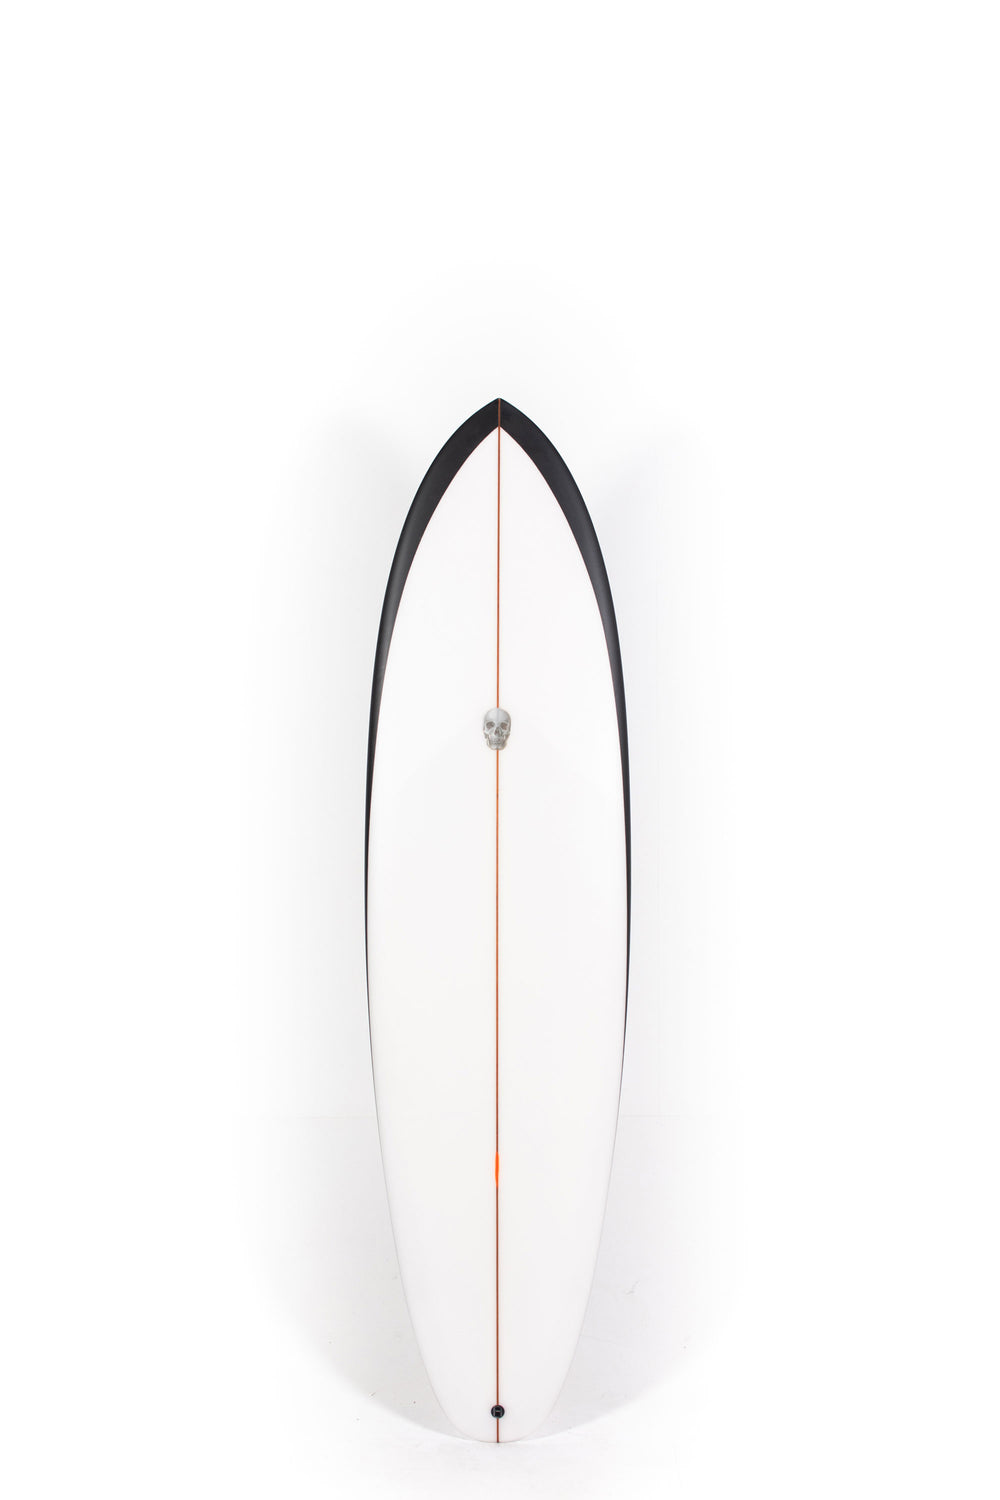 Christenson Surfboards - TWIN TRACKER - 6'10